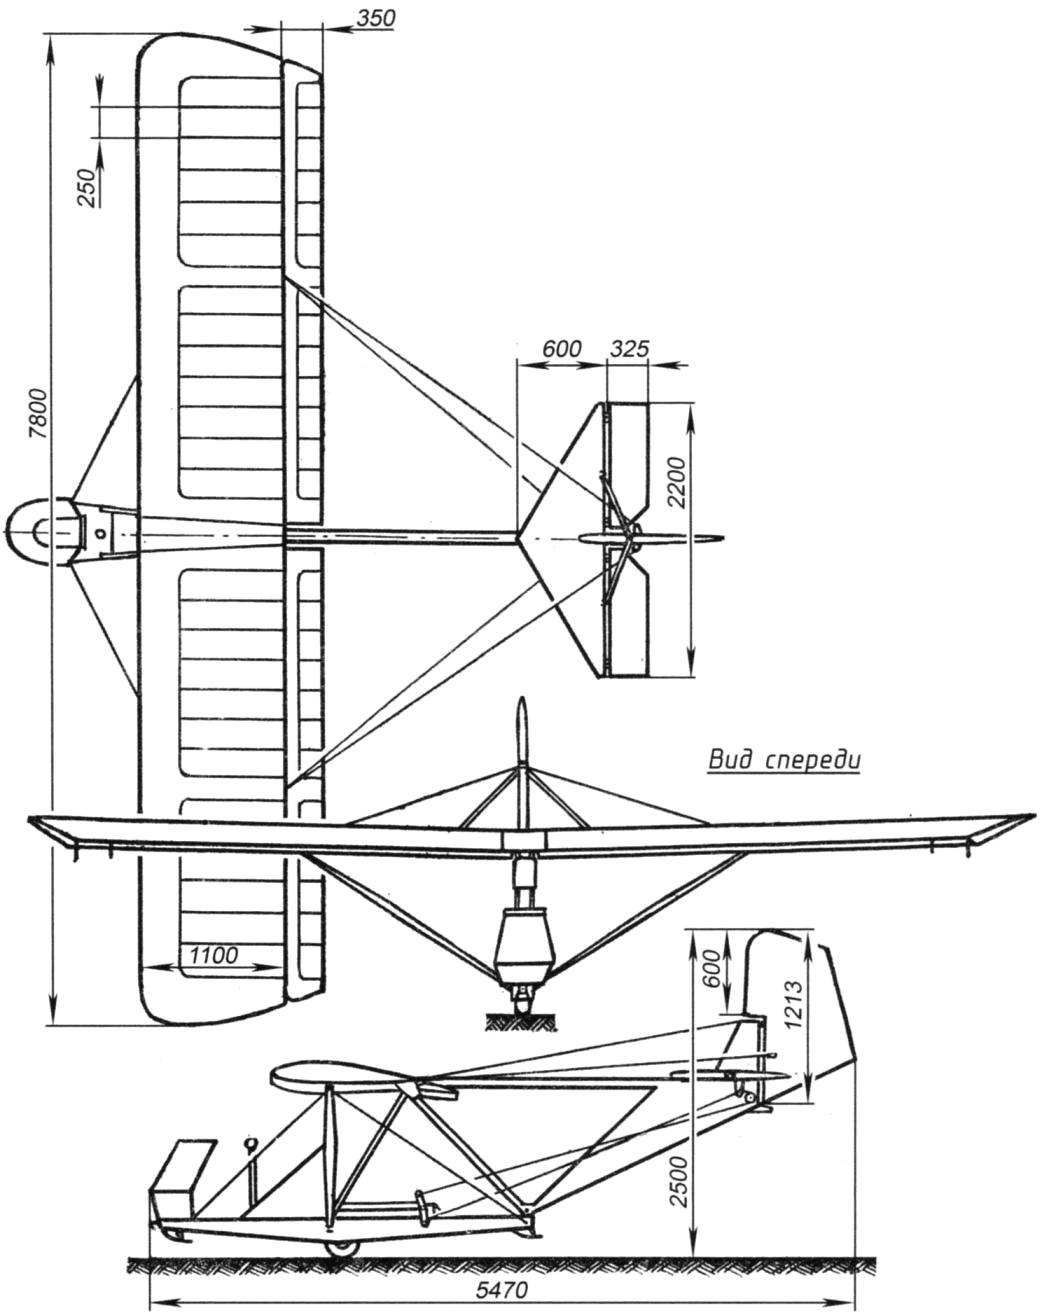 Geometric pattern glider BRO-11M design B. I. Oscines